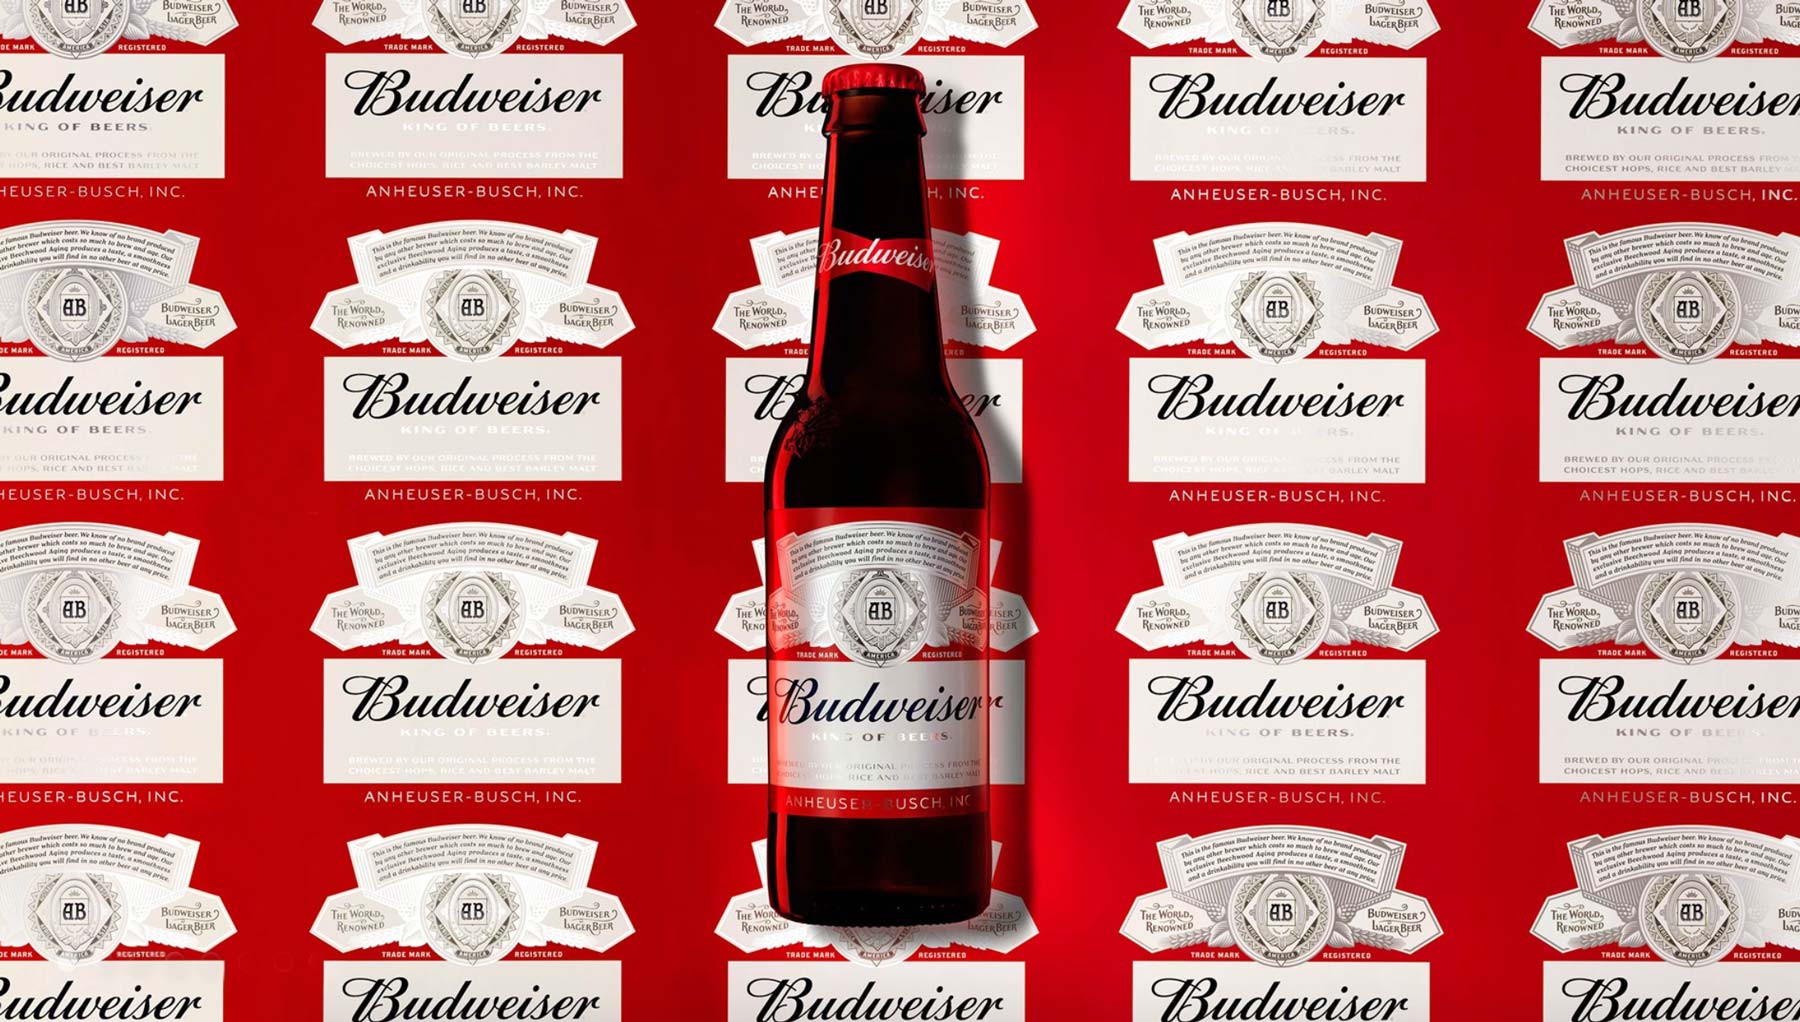 Beer & Branding: Budweiser